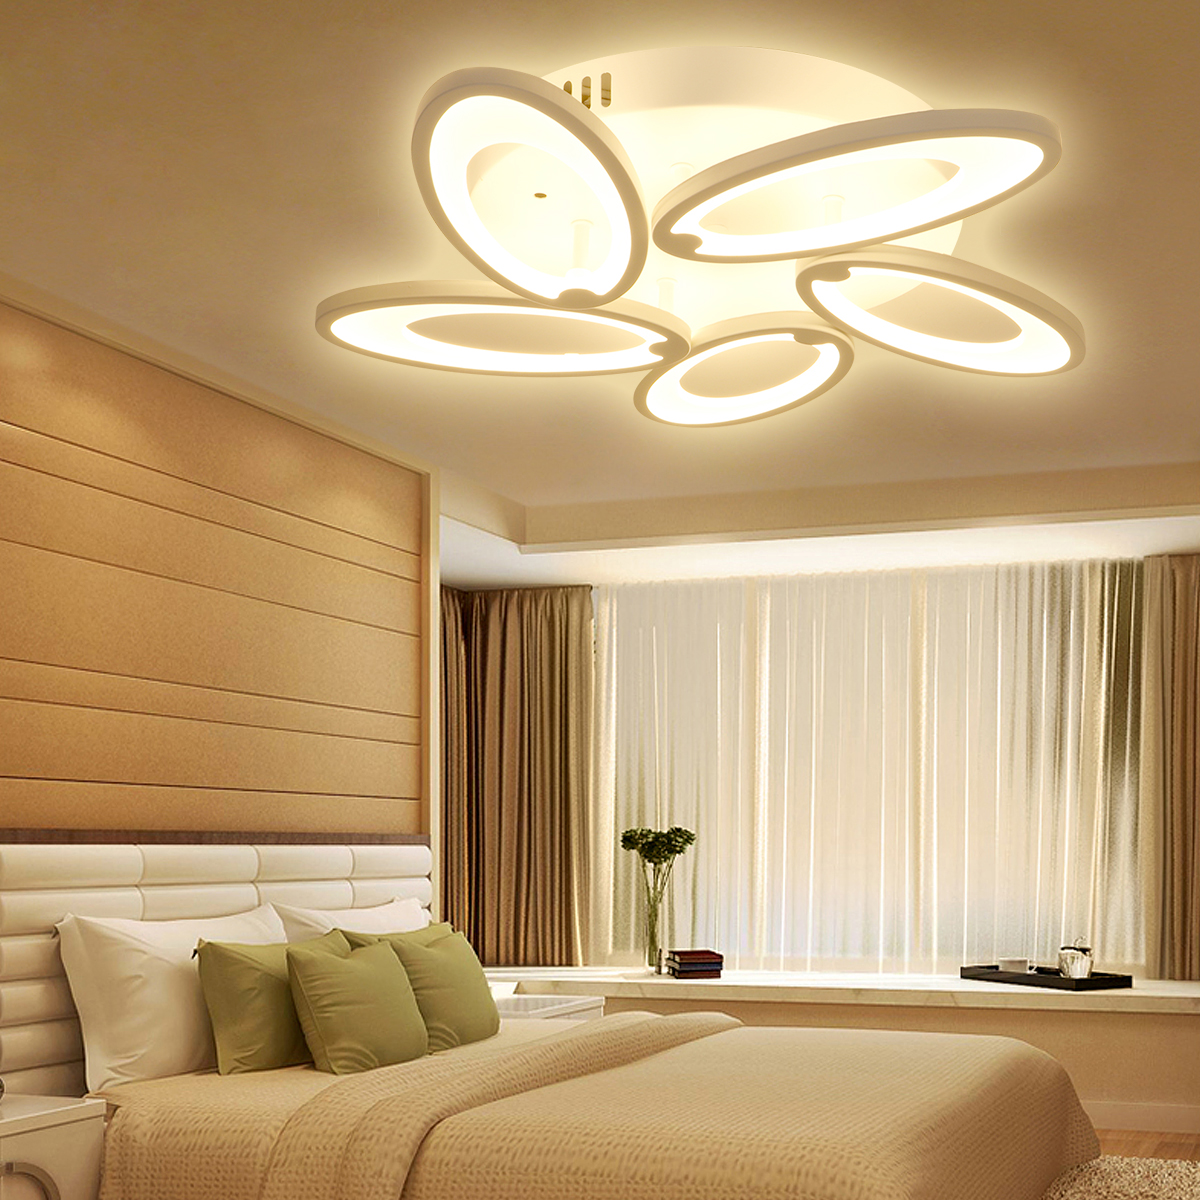 5-Heads-Modern-LED-Ceiling-Acrylic-Home-Lights-Home-Chandelier-LampRemote-3200-6500K-1793901-8